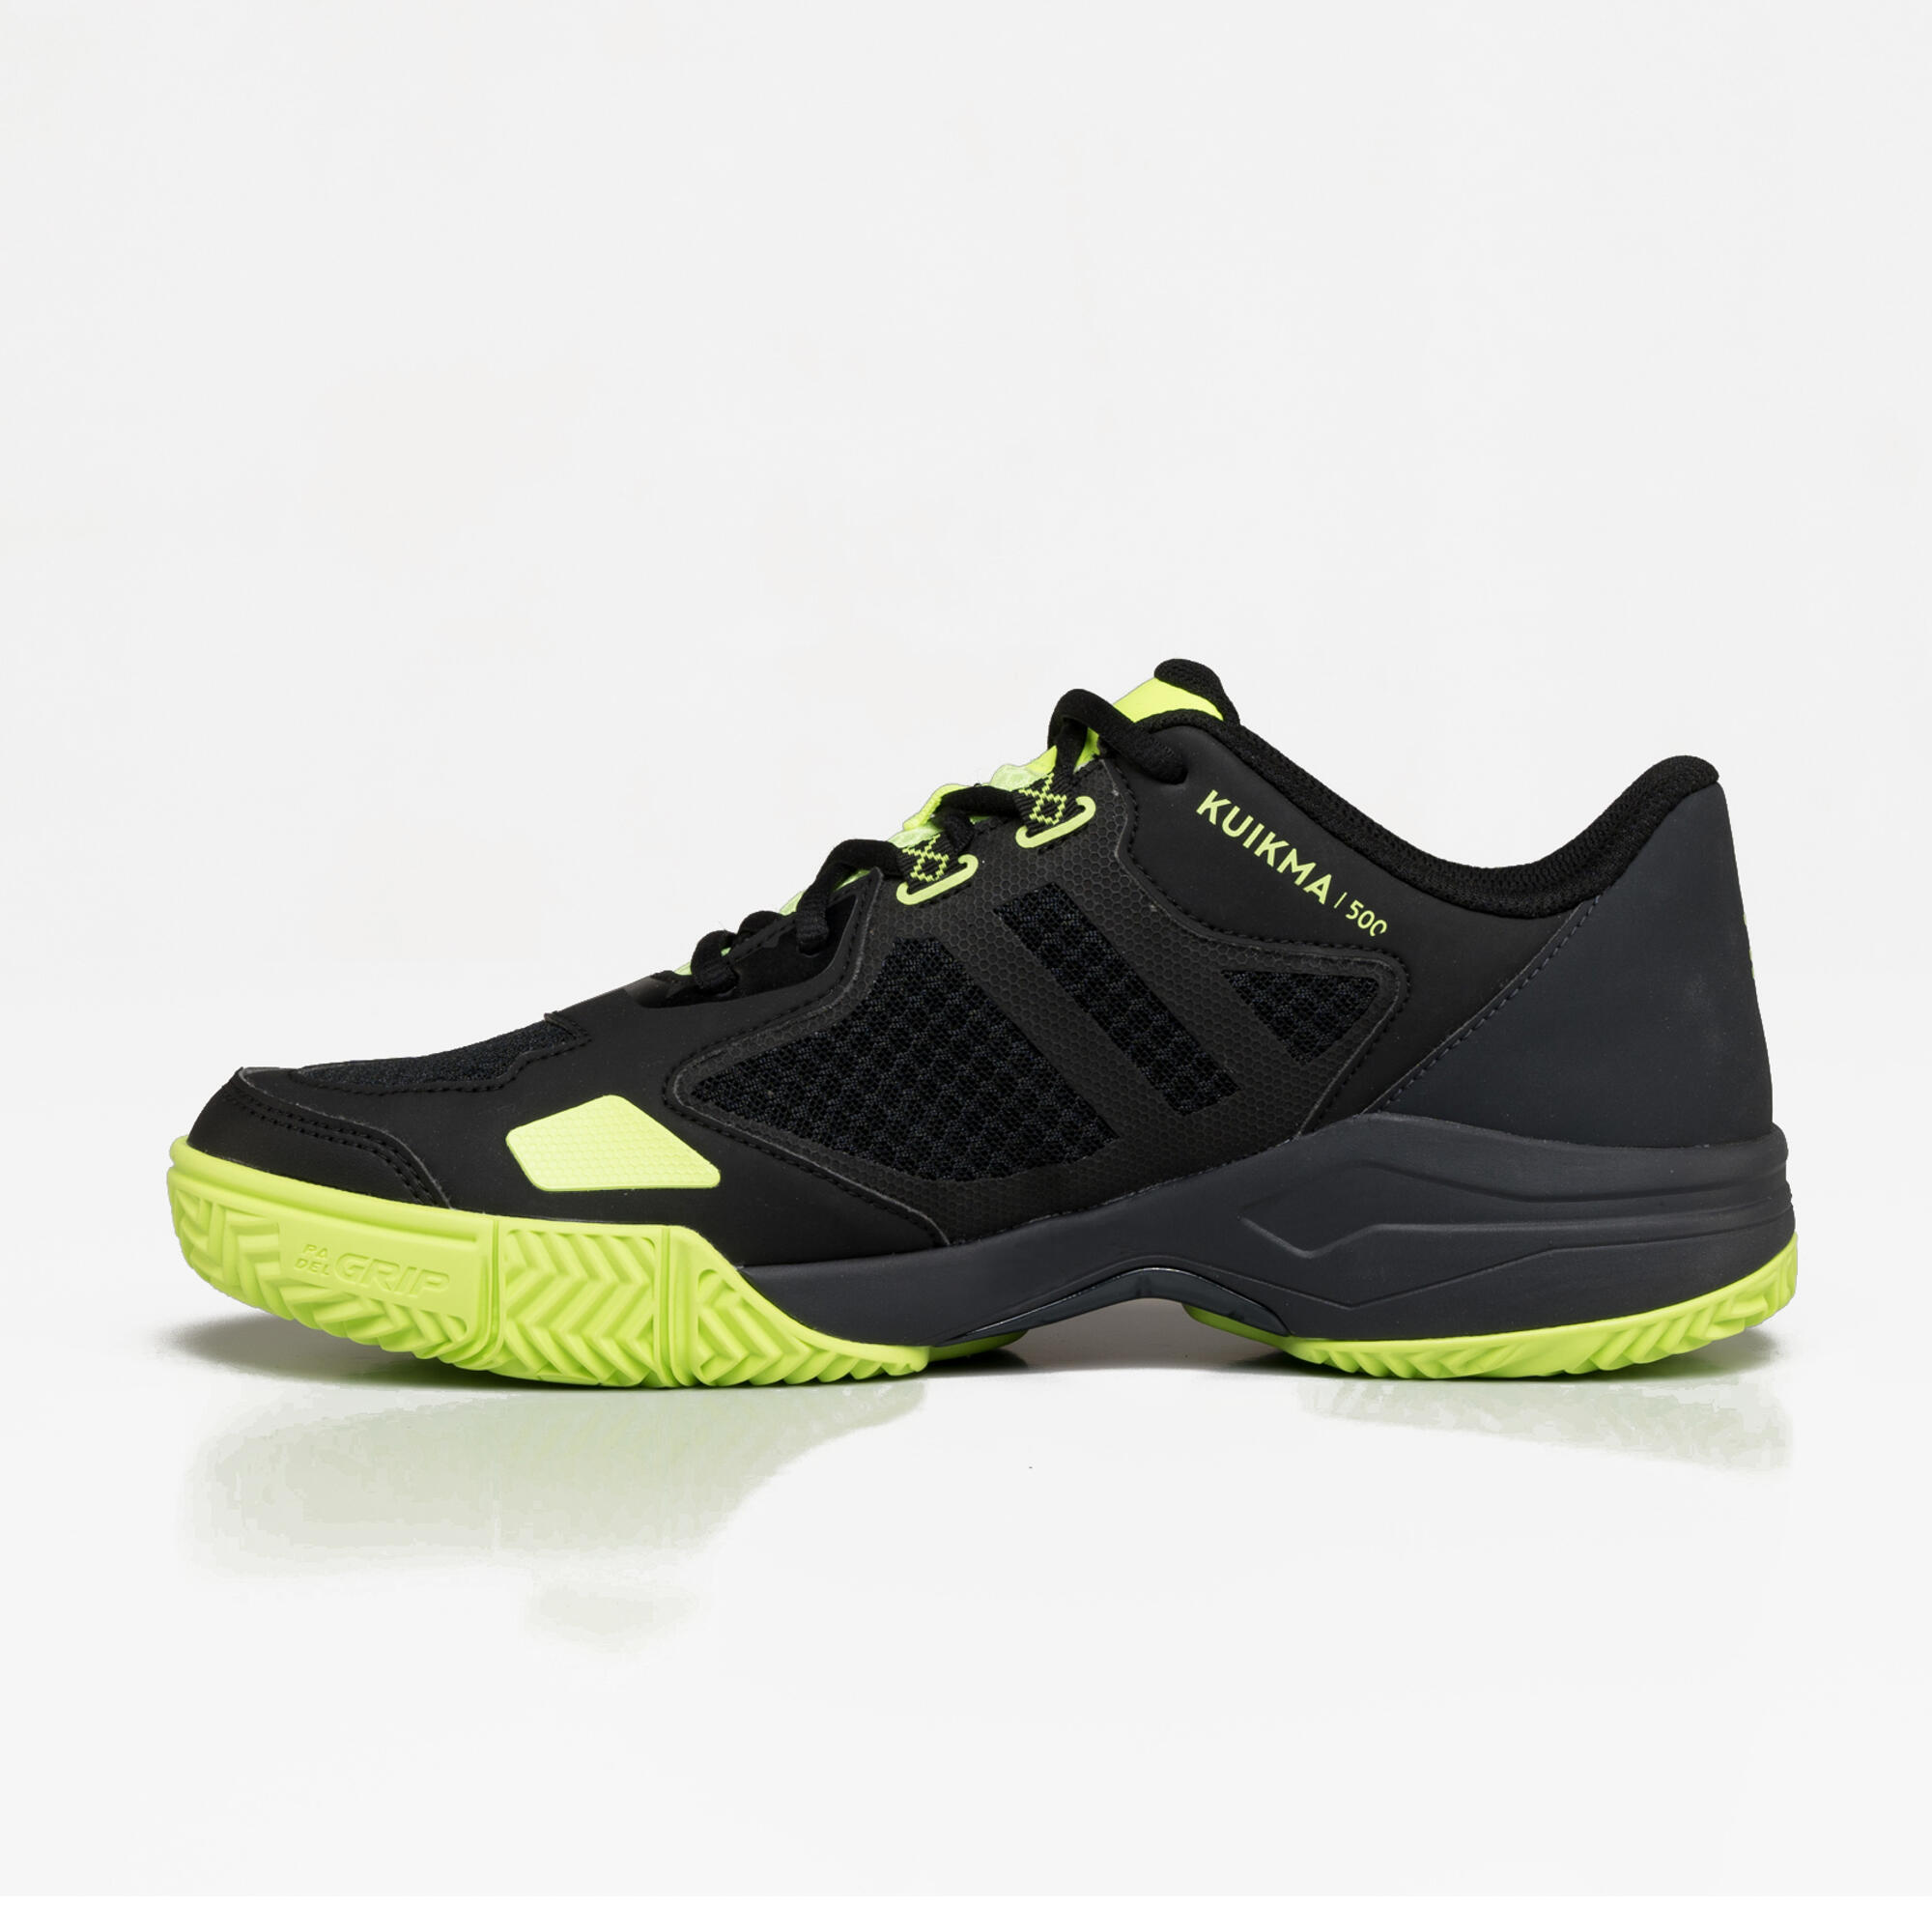 Men's Padel Shoes PS 500 - Black/Yellow 2/6